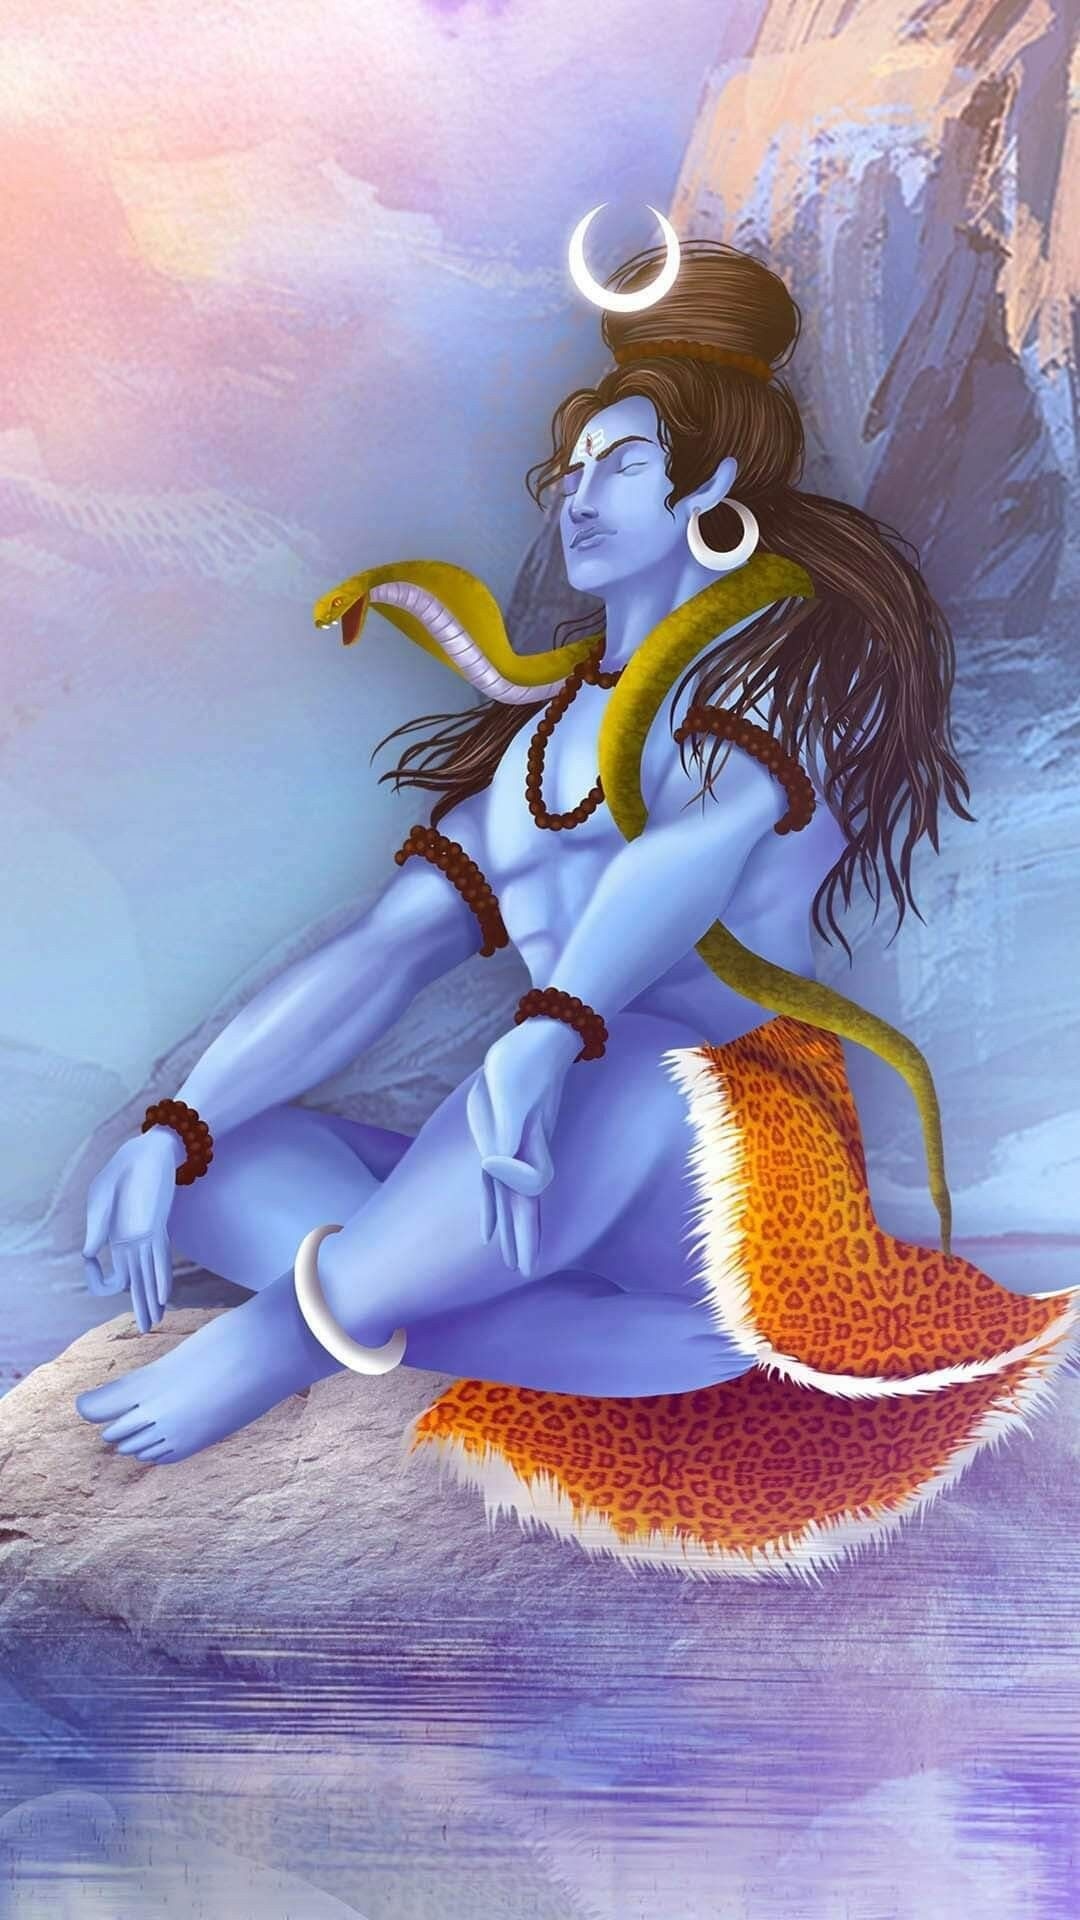 Sivan Images - Beautiful Painting - Lord Shiva